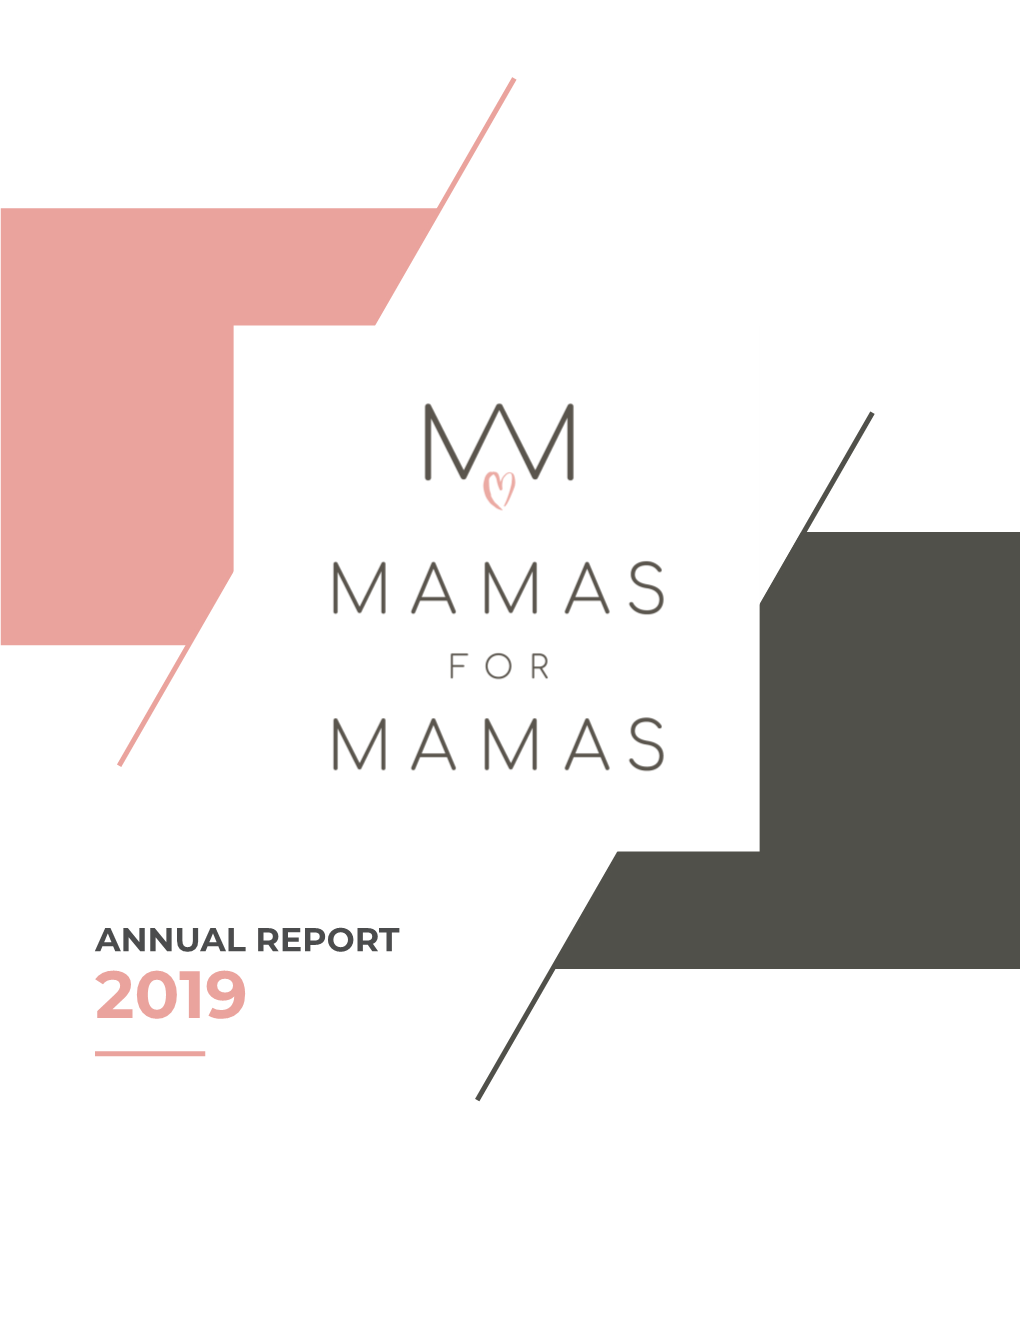 Annual Report 2019 2 Annual Report Template